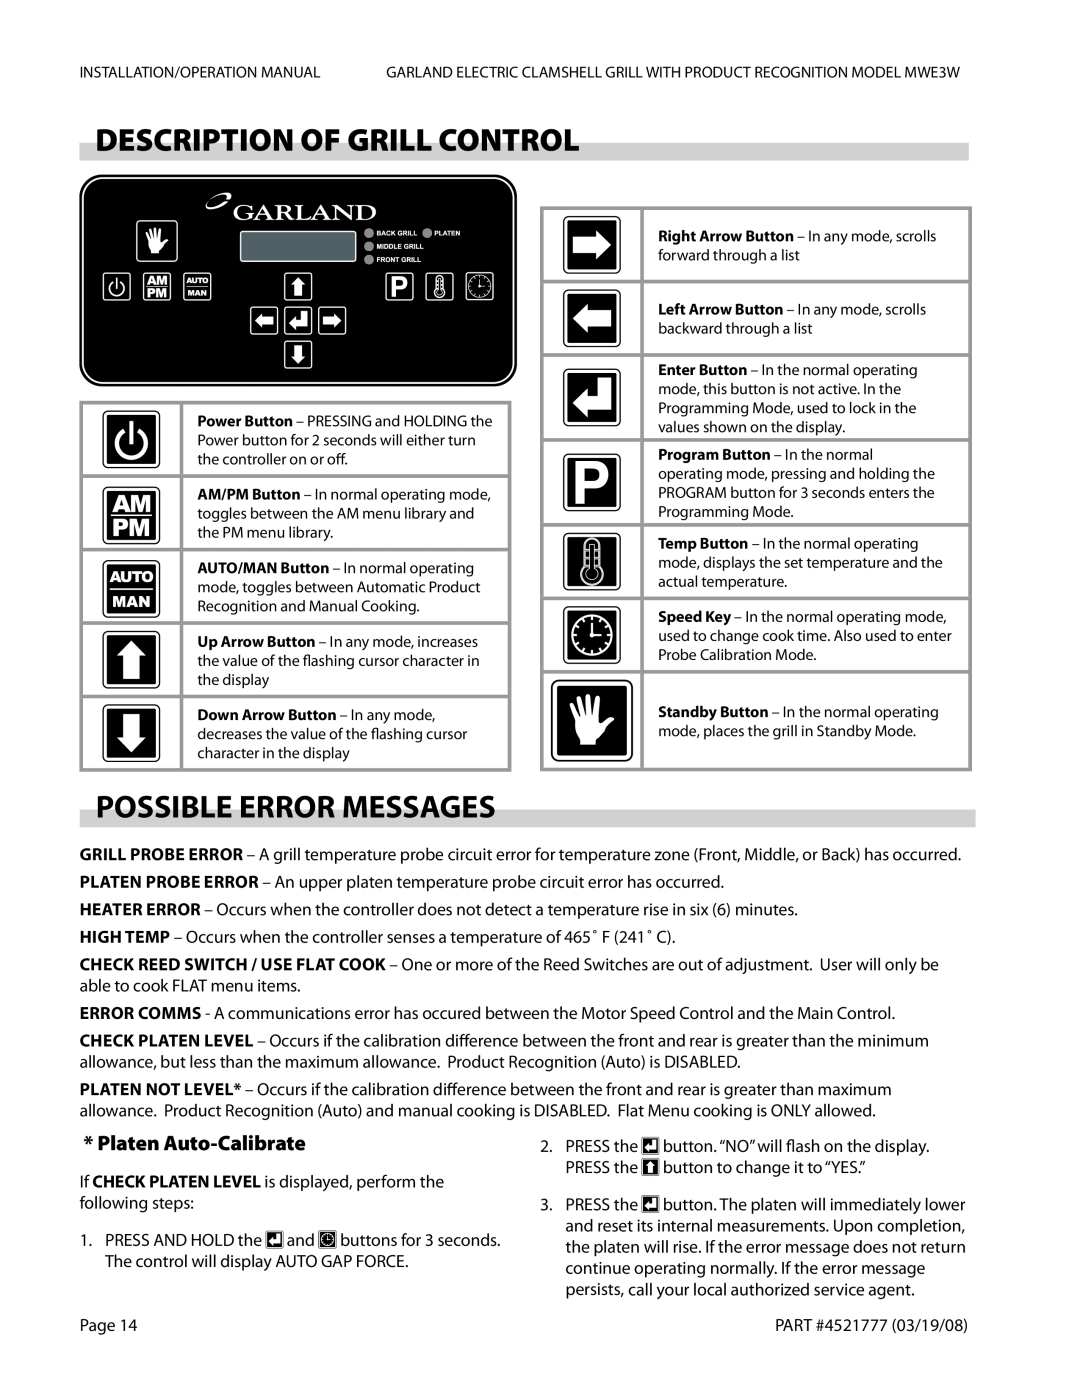 Garland MWE3W operation manual Description Of Grill Control, Possible Error Messages, Platen Auto-Calibrate 